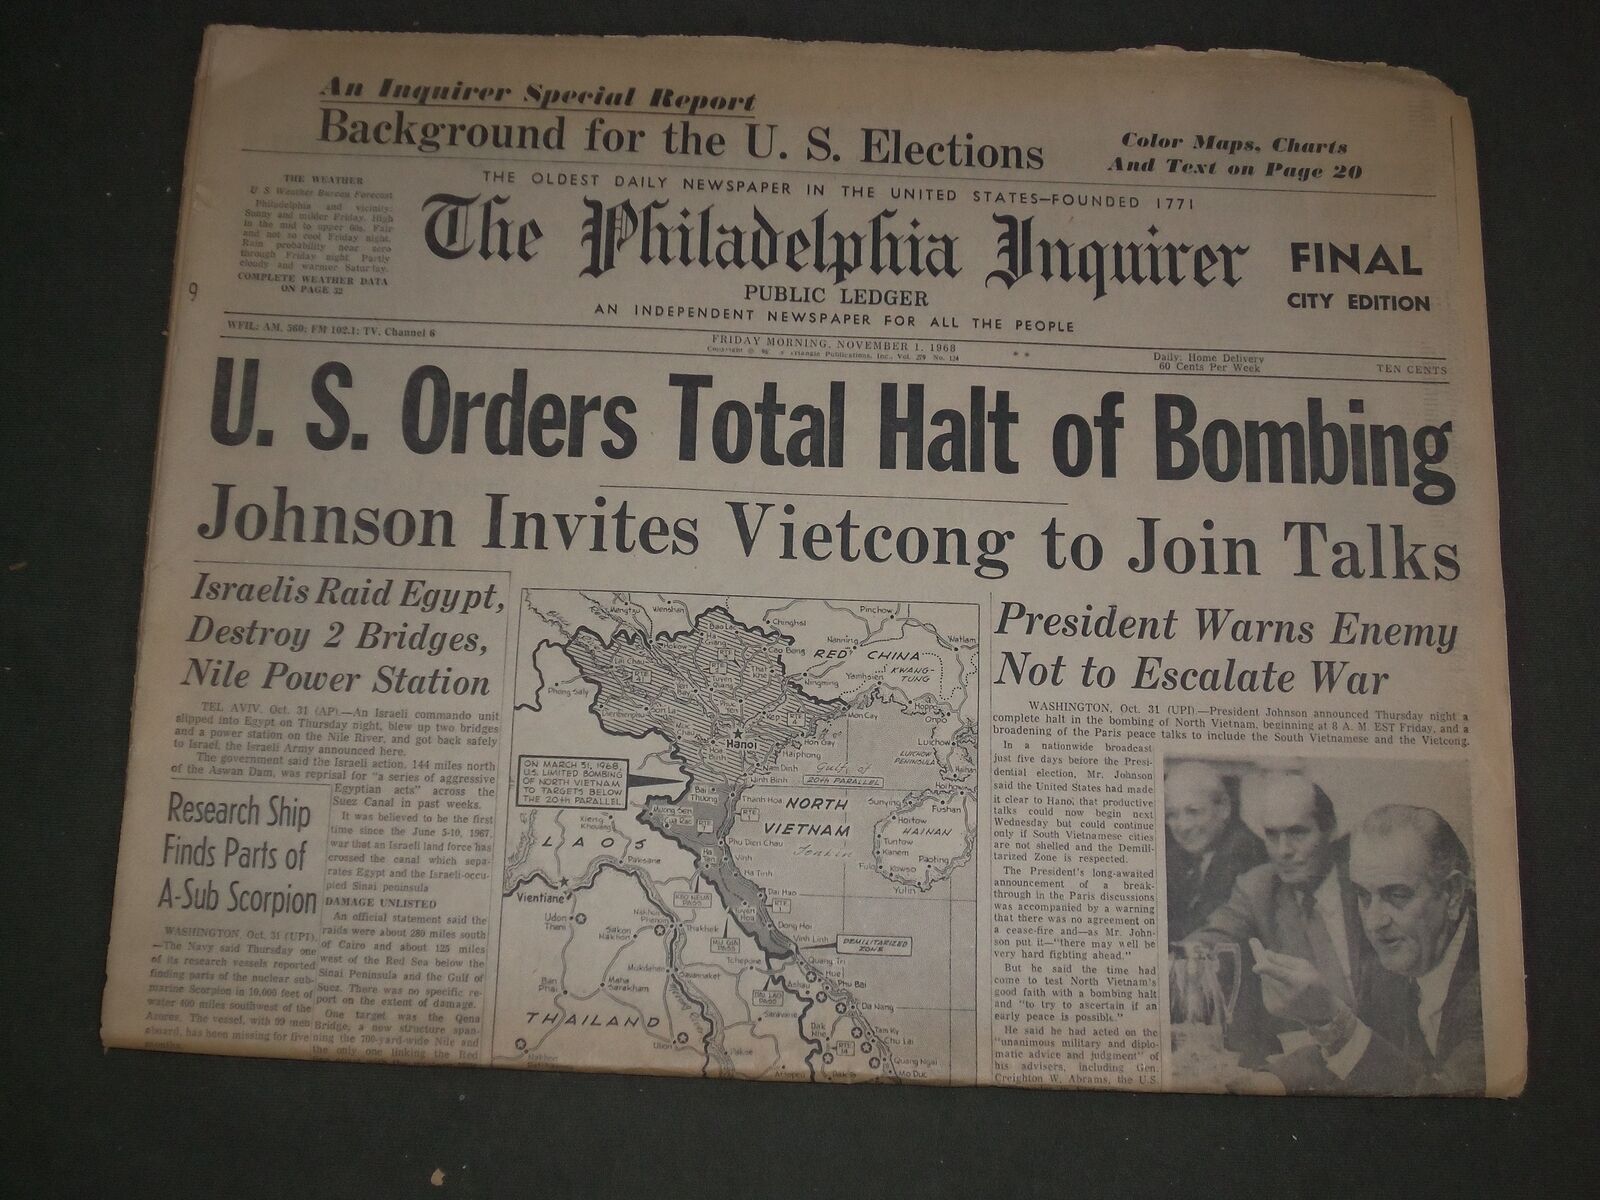 1968 NOV 1 PHILADELPHIA INQUIRER NEWSPAPER-U.S. ORDERS HALT OF BOMBING - NP 3140